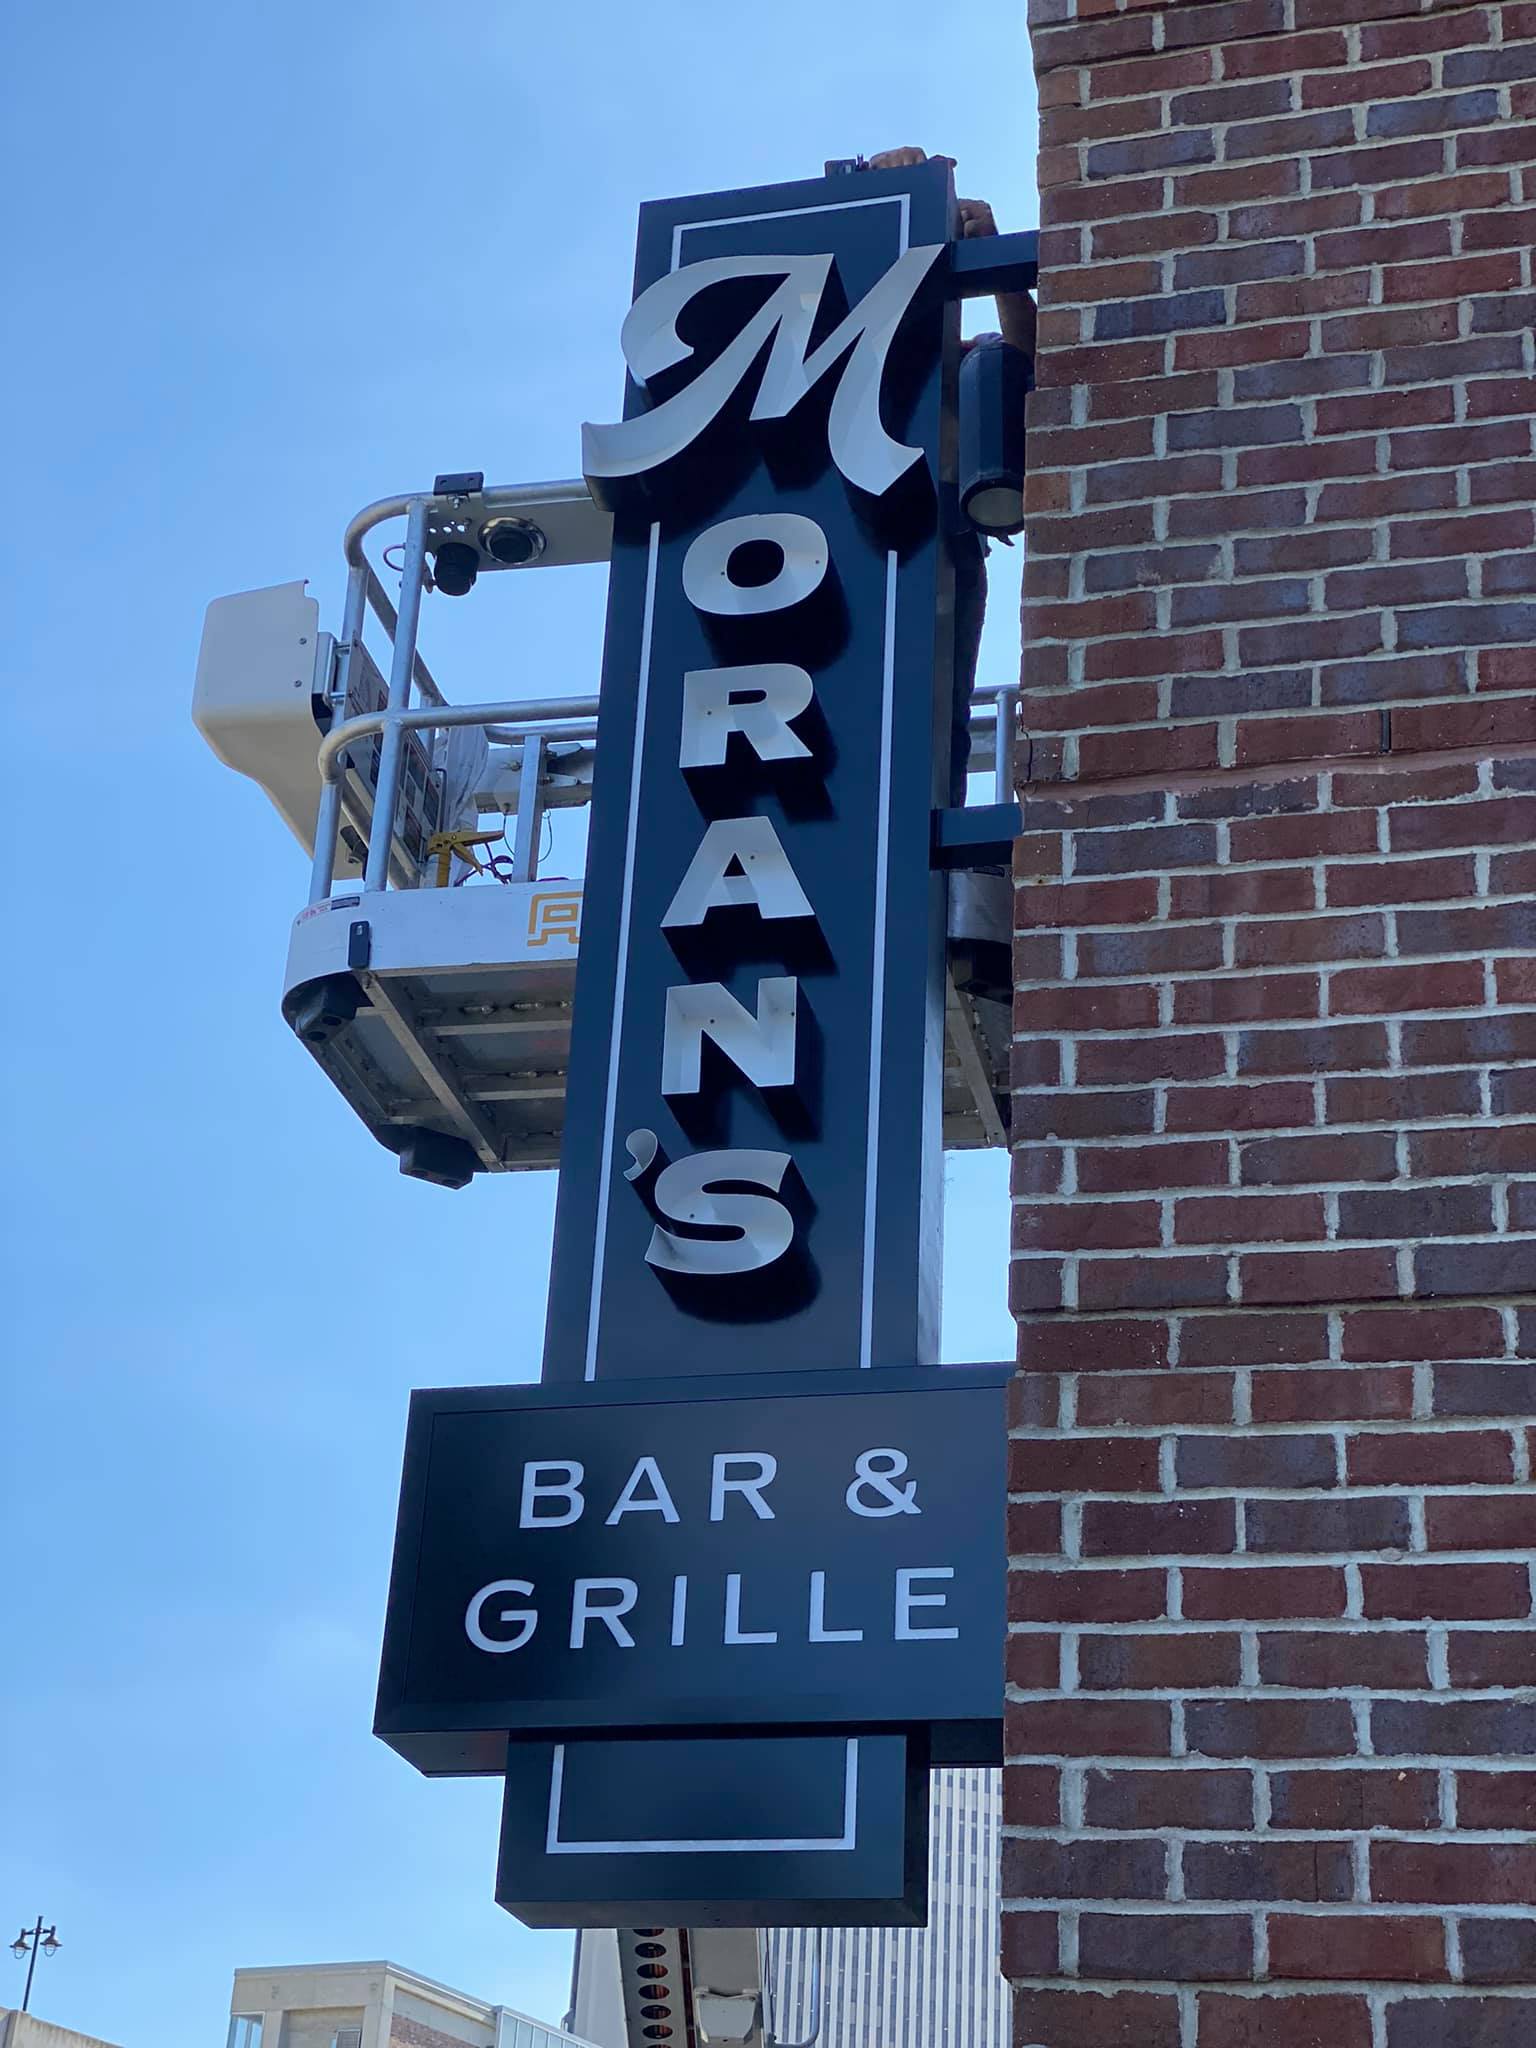 Moran's Bar & Grille